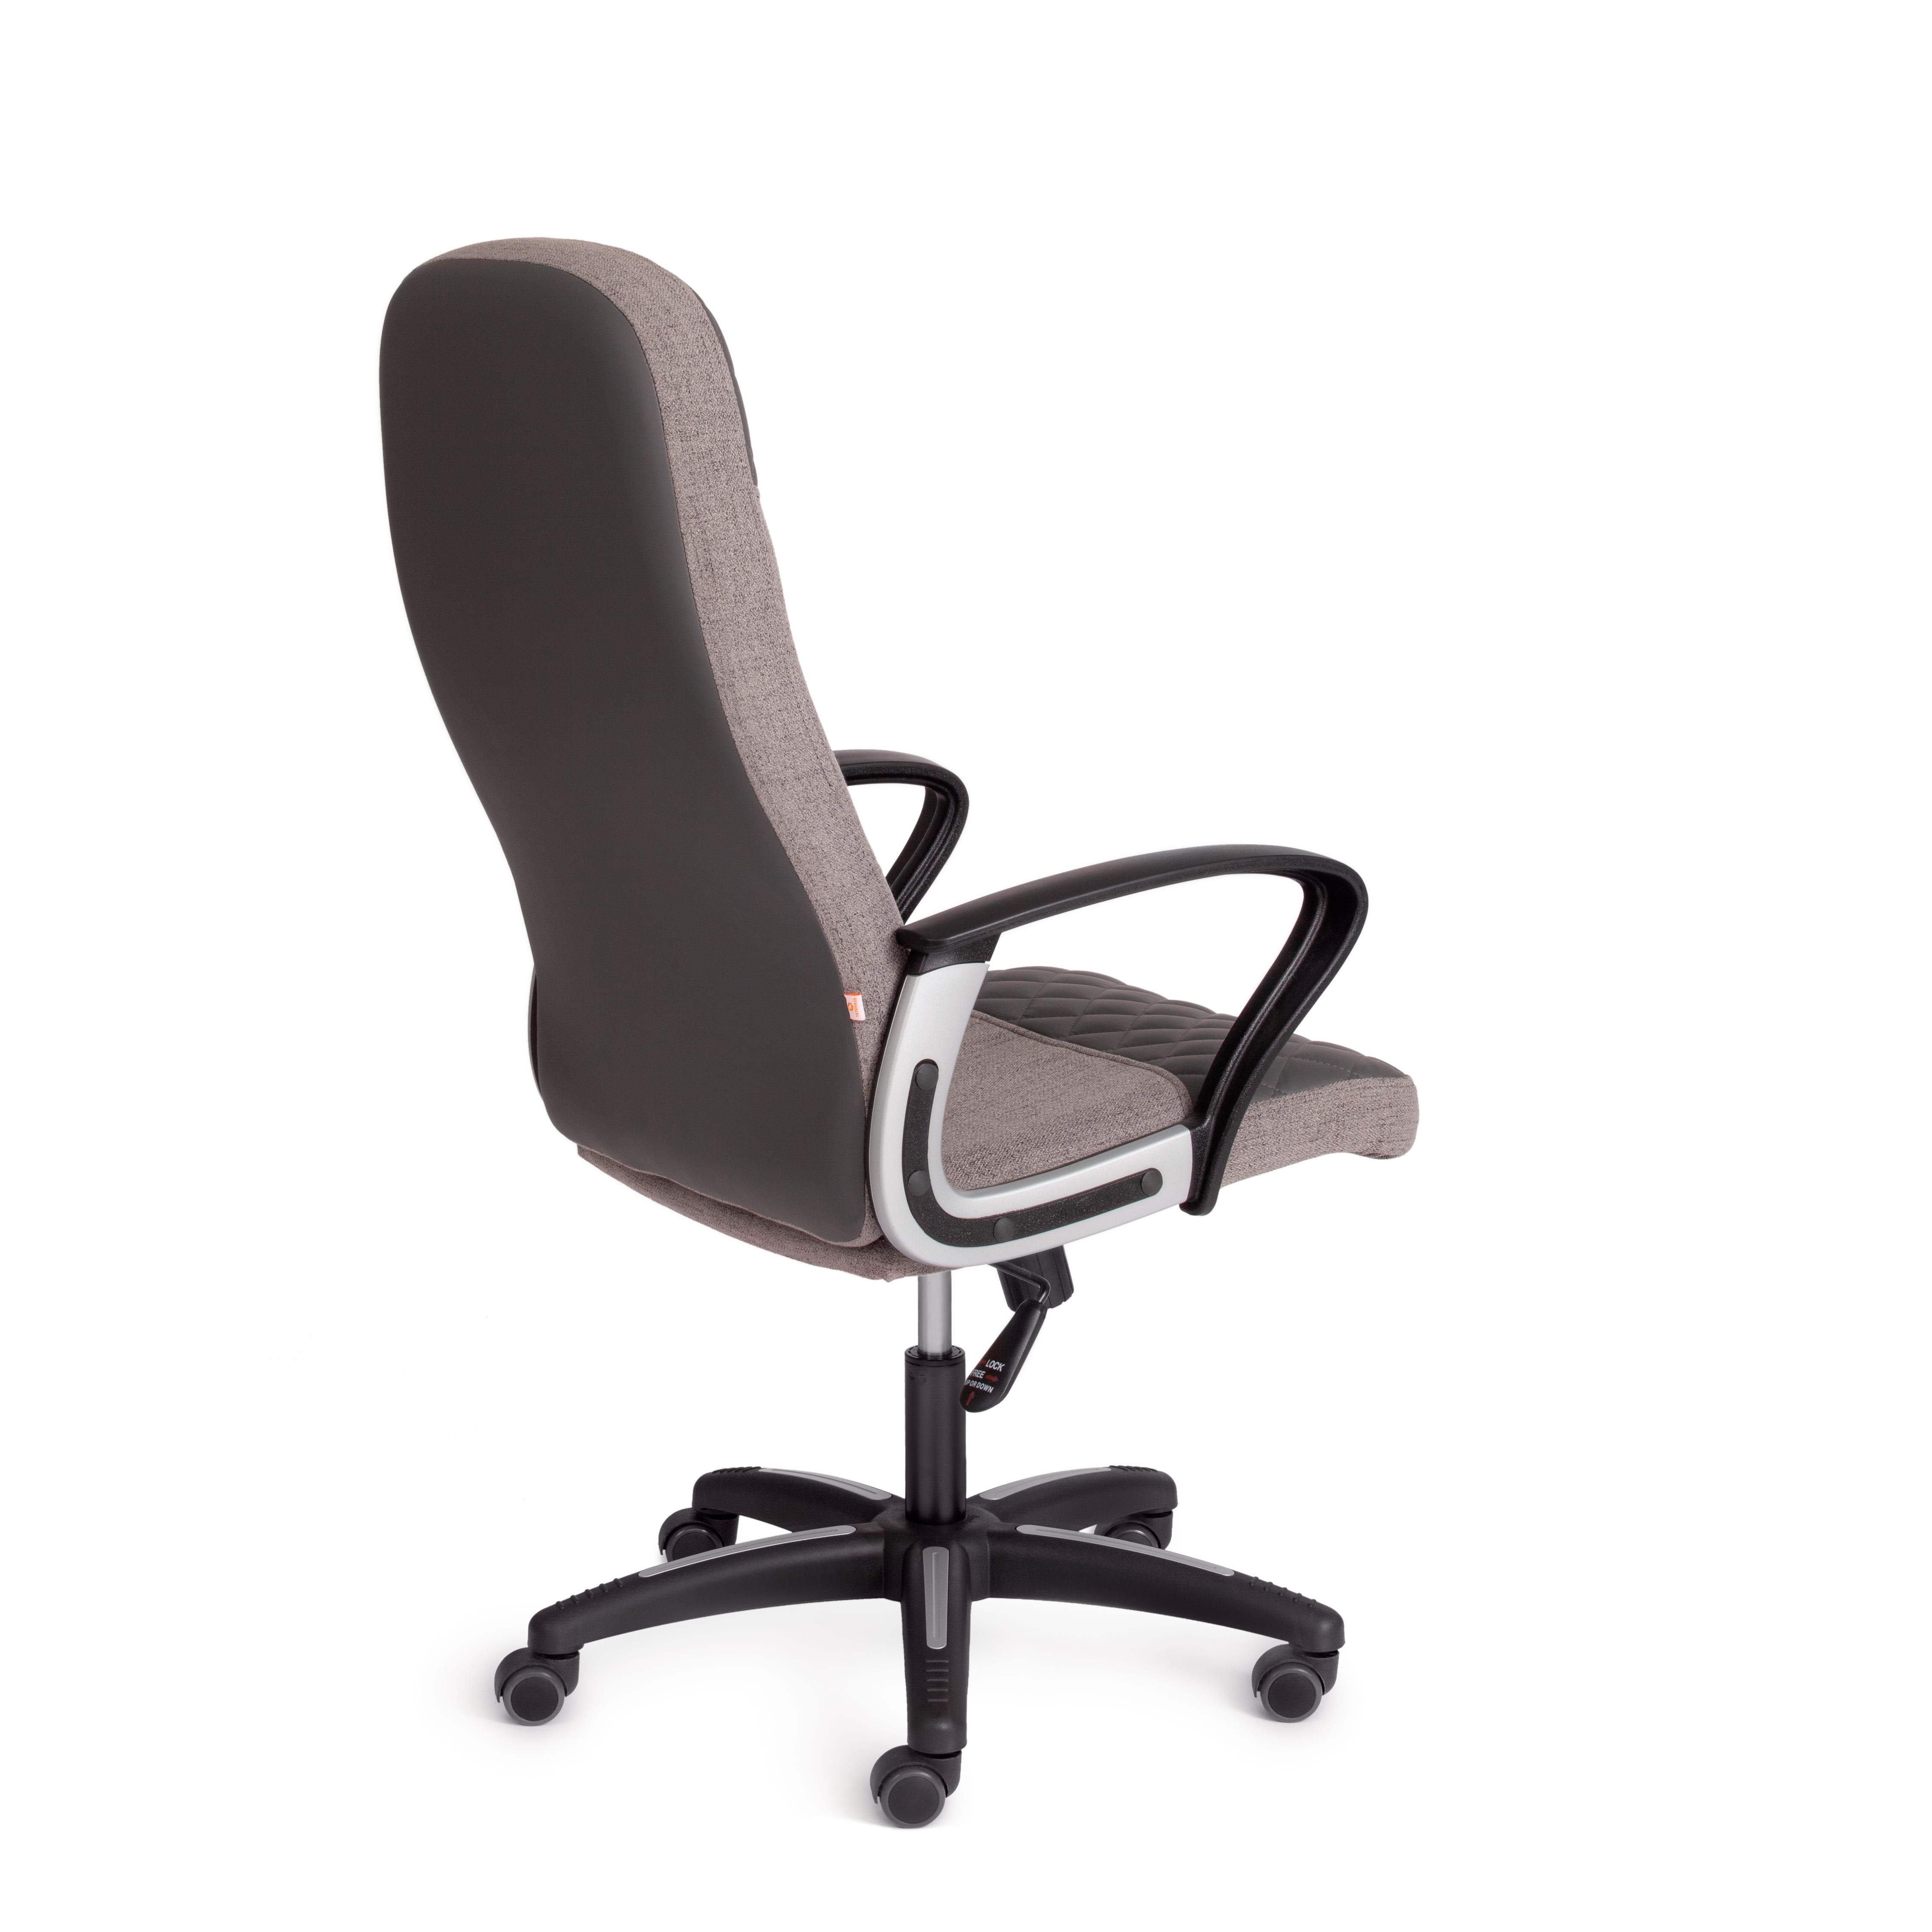 Кресло ADVANCE ткань/кож/зам, серый, фостер 19/C 36